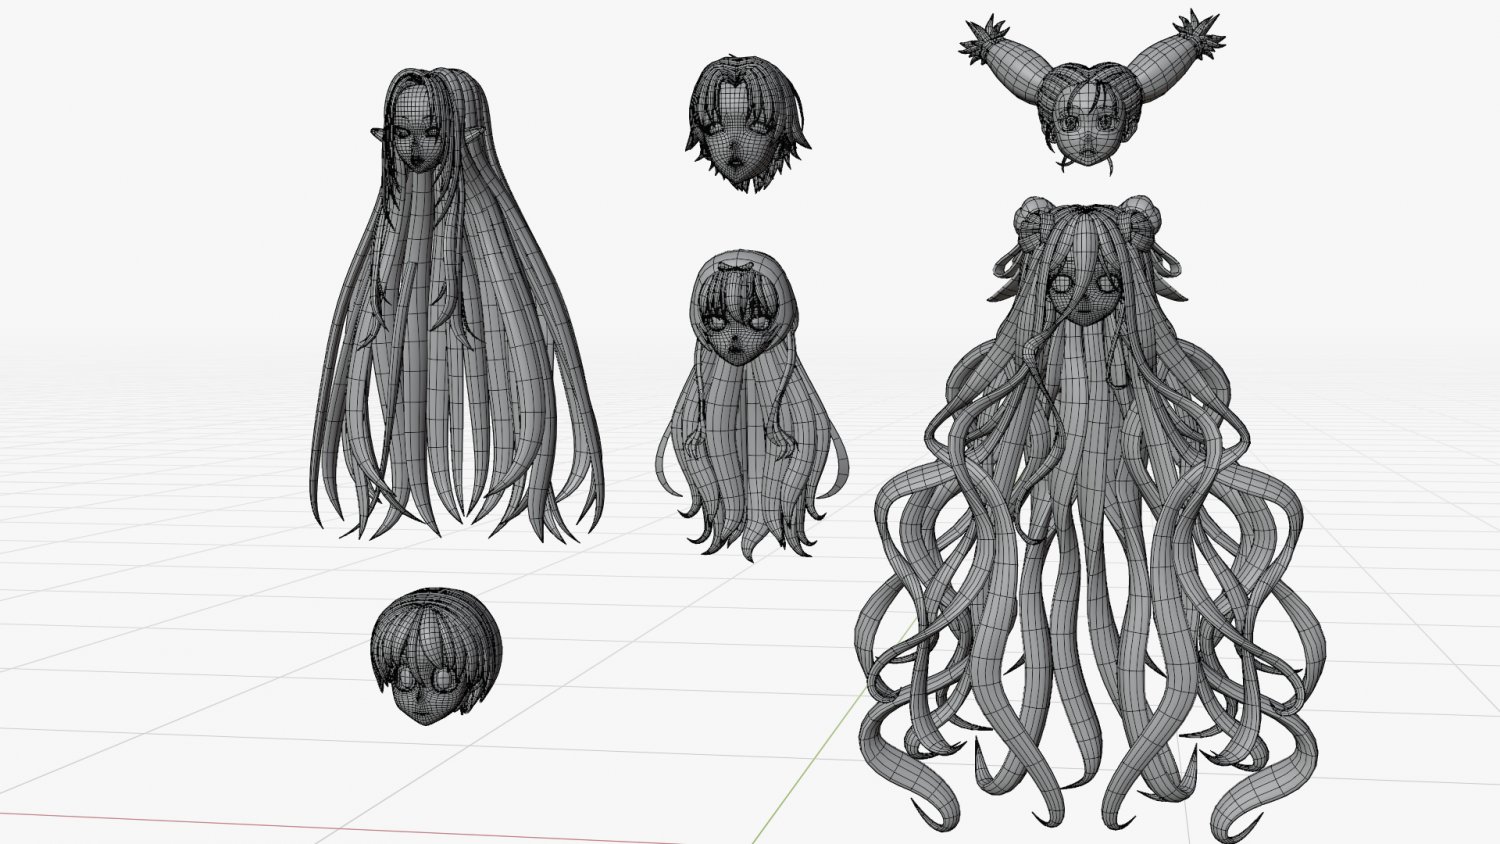 Anime hair 3D Model in Anatomy 3DExport